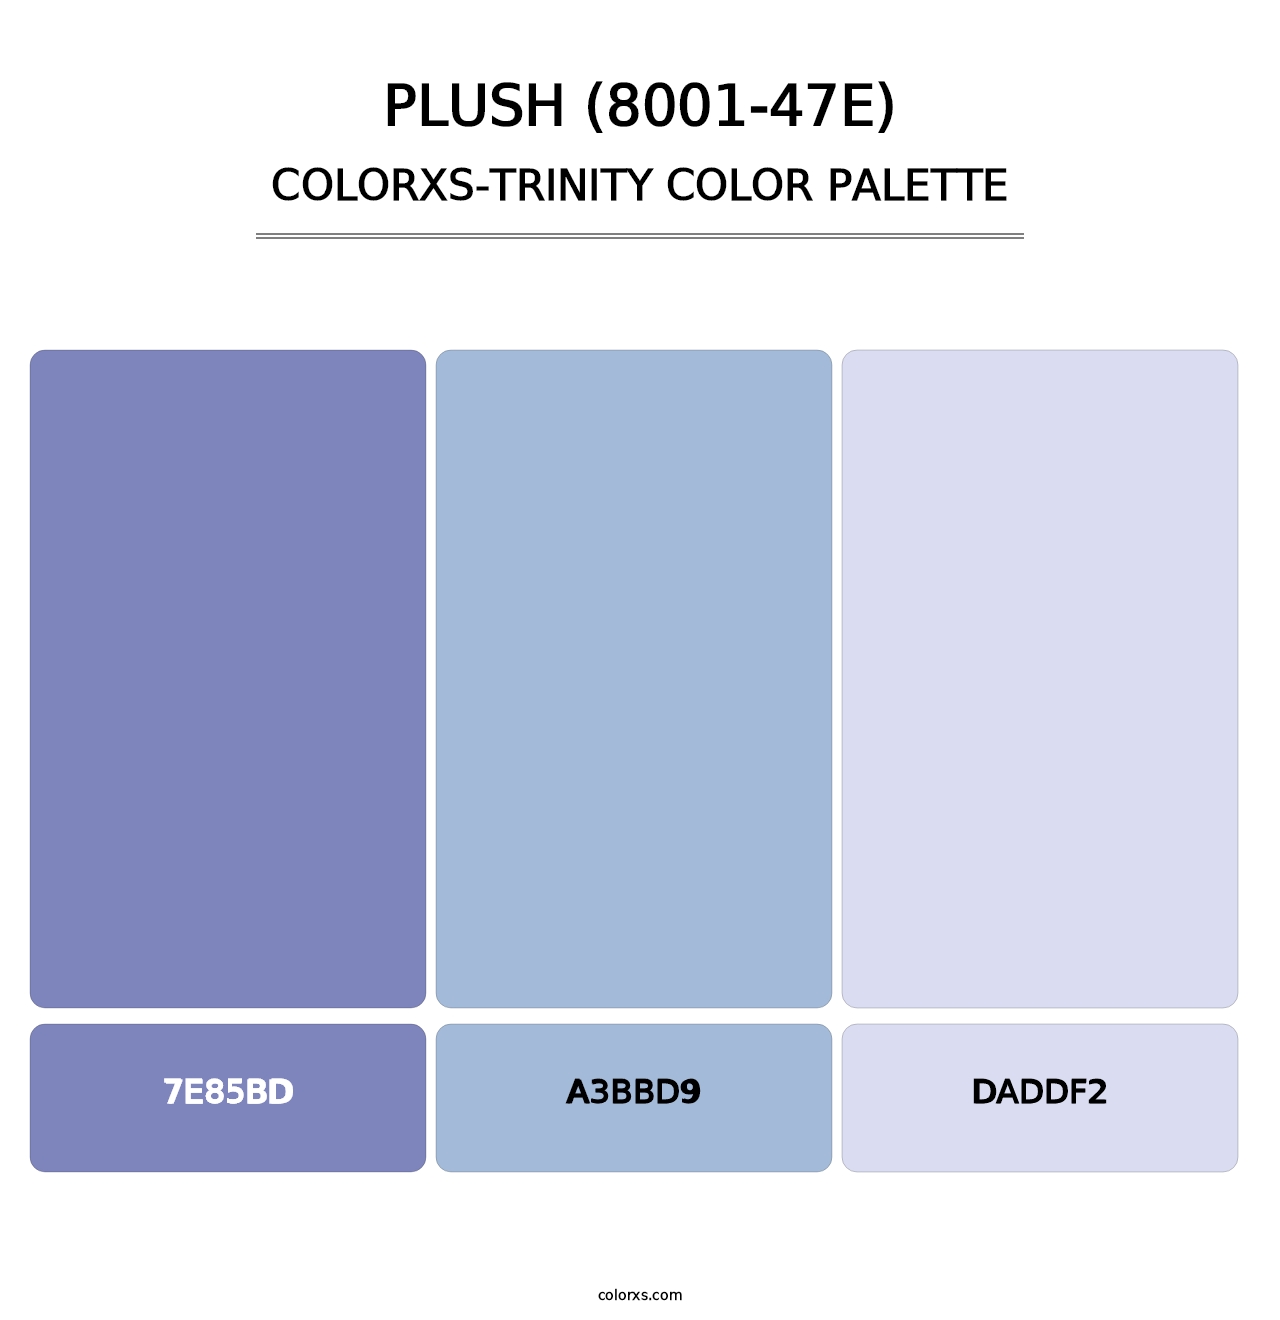 Plush (8001-47E) - Colorxs Trinity Palette